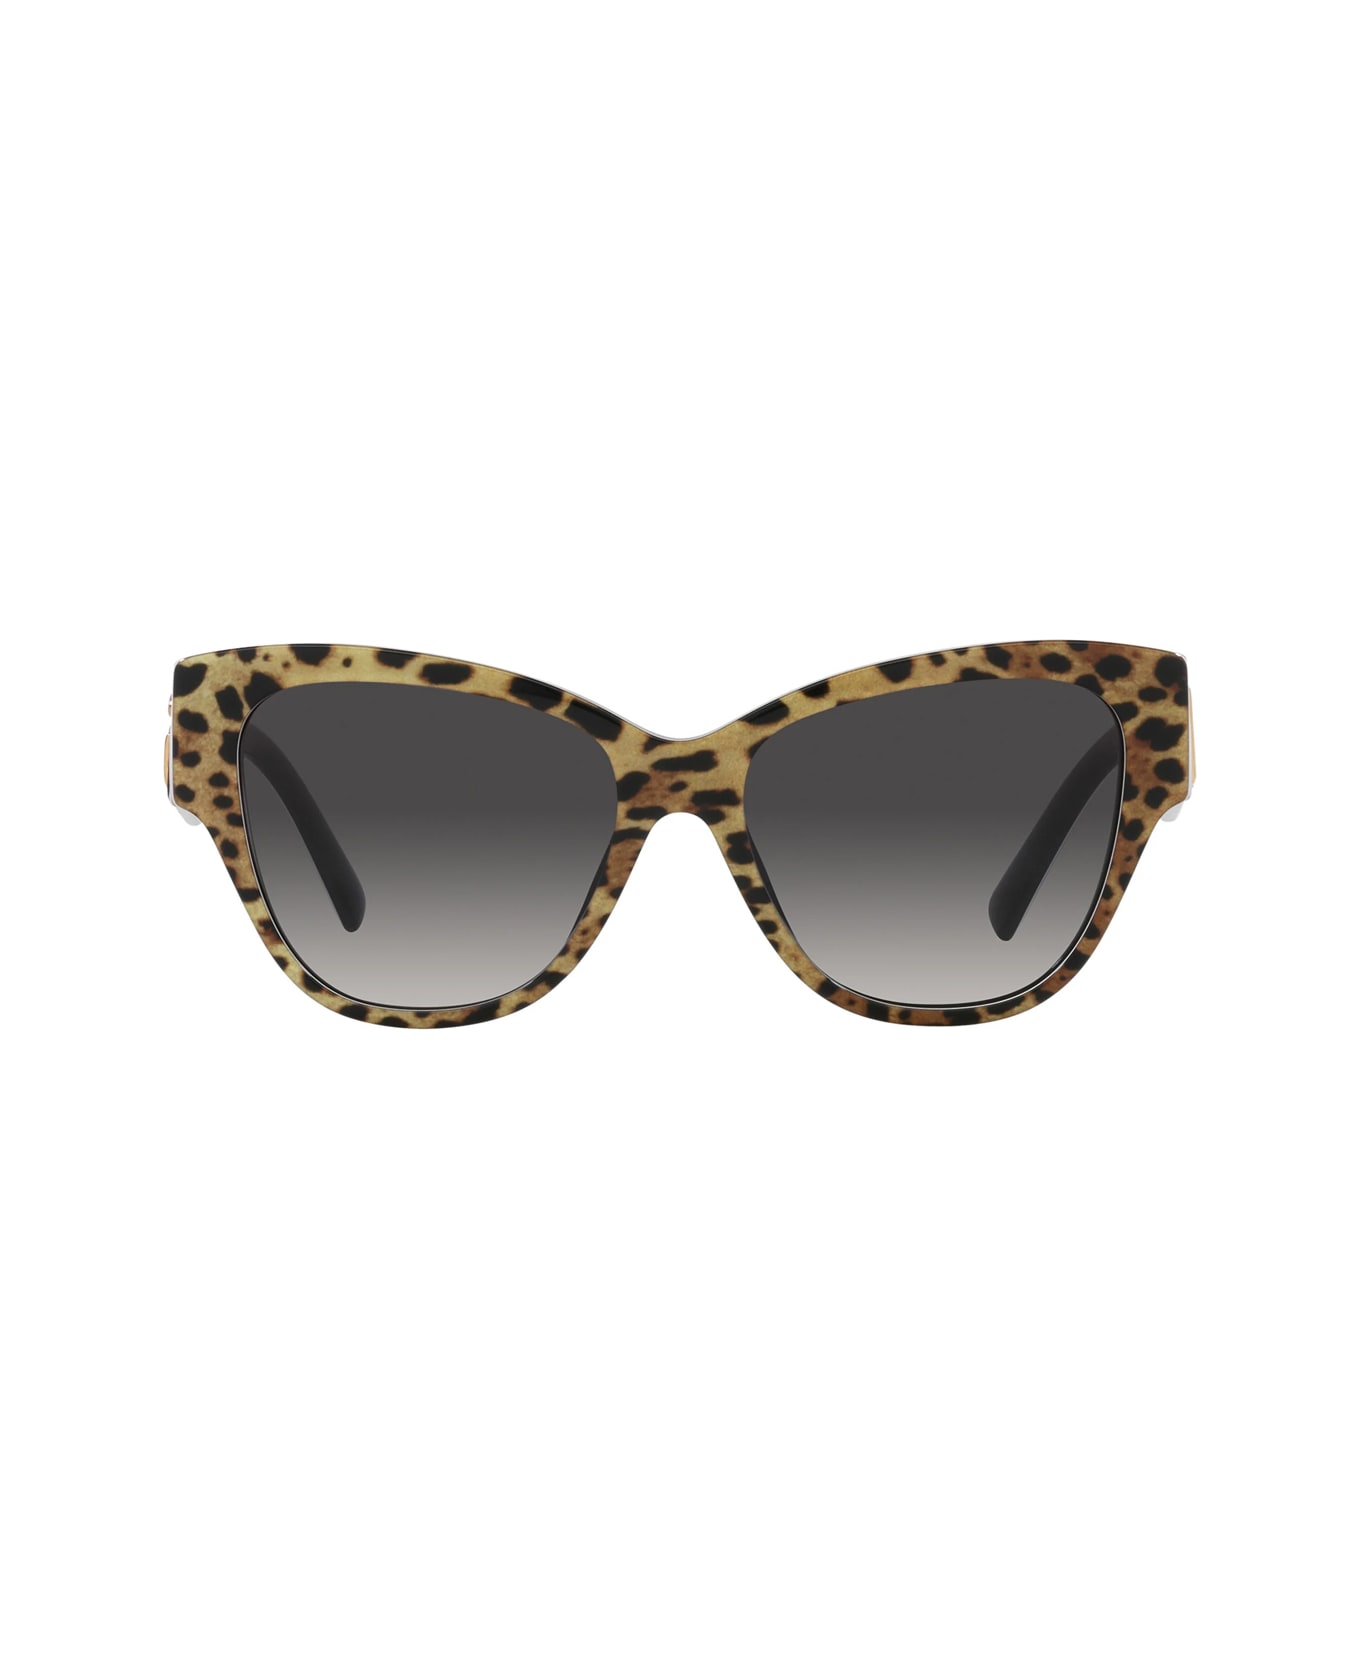 Dolce & Gabbana Eyewear Dg4449 31638g Sunglasses - Beige サングラス